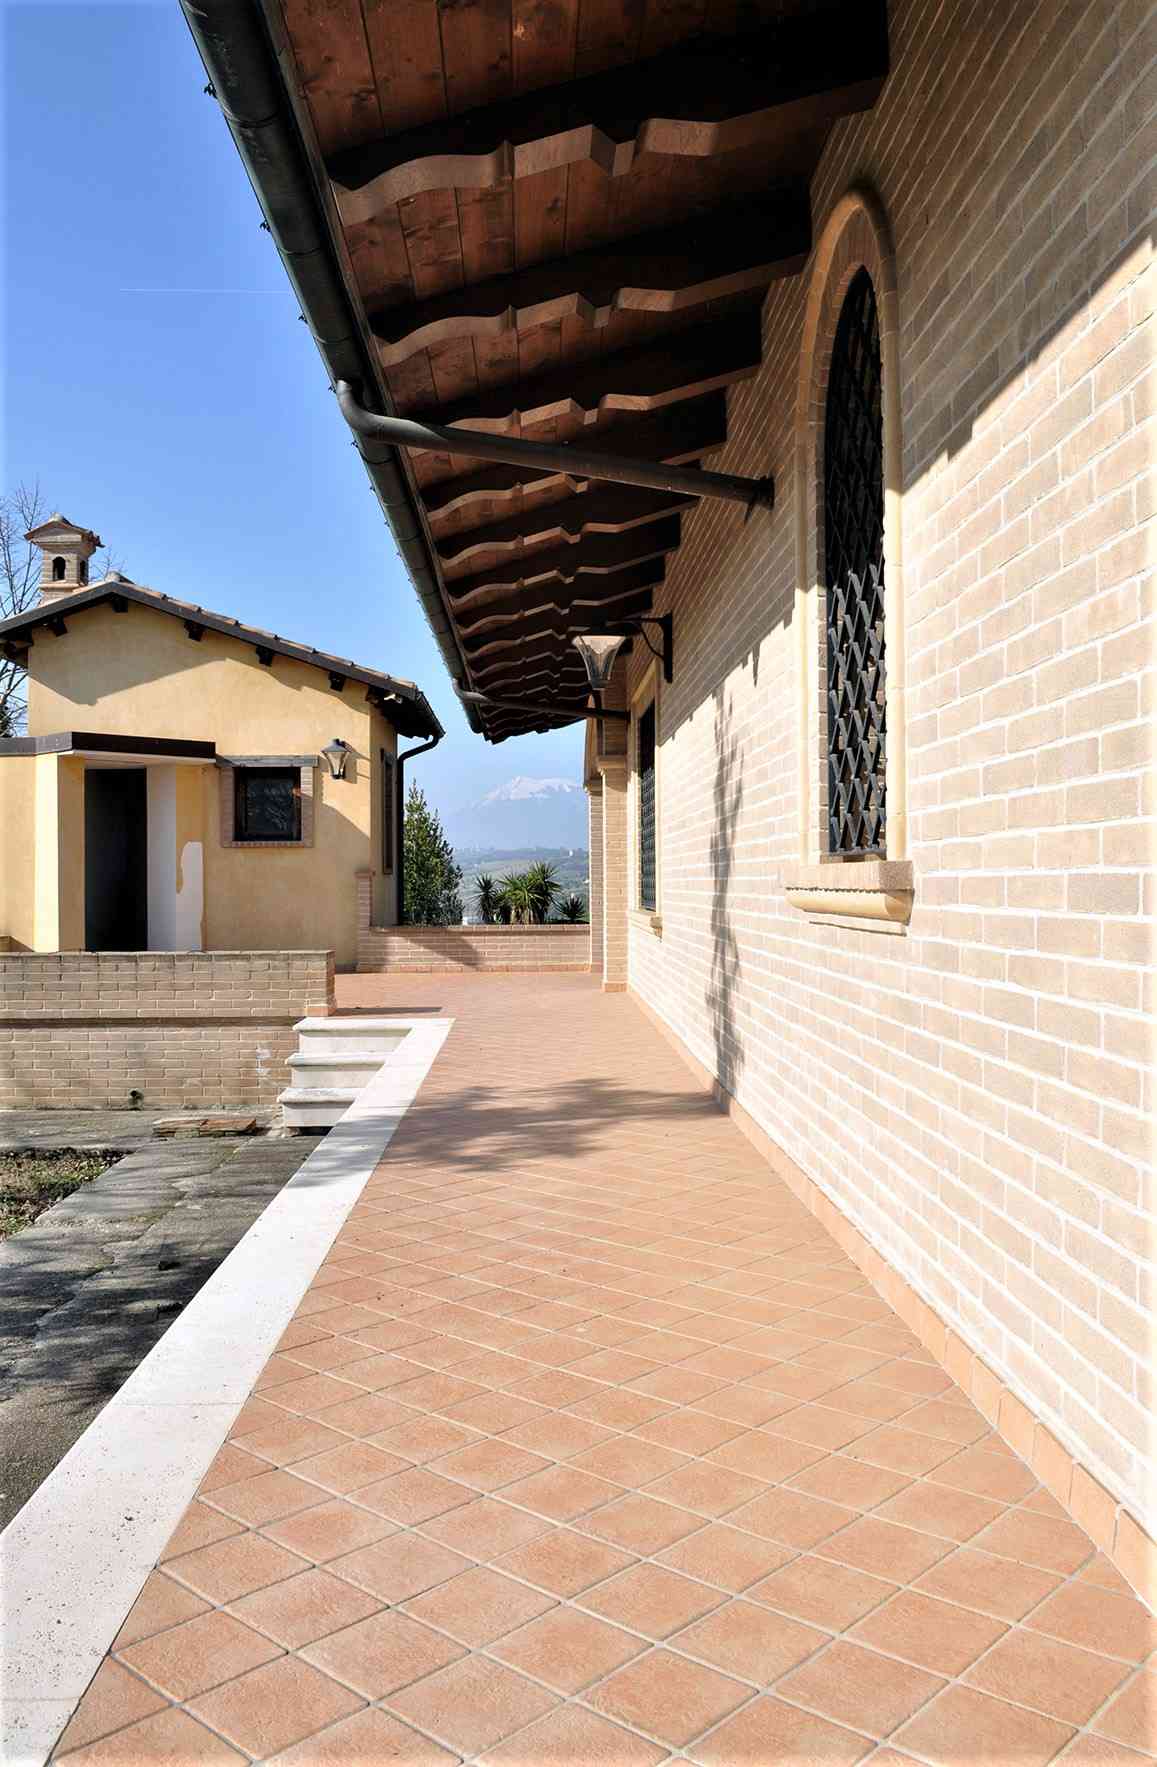 Villa Villa in vendita Tortoreto (TE), Villa Bianca - Tortoreto - EUR 567.877 510